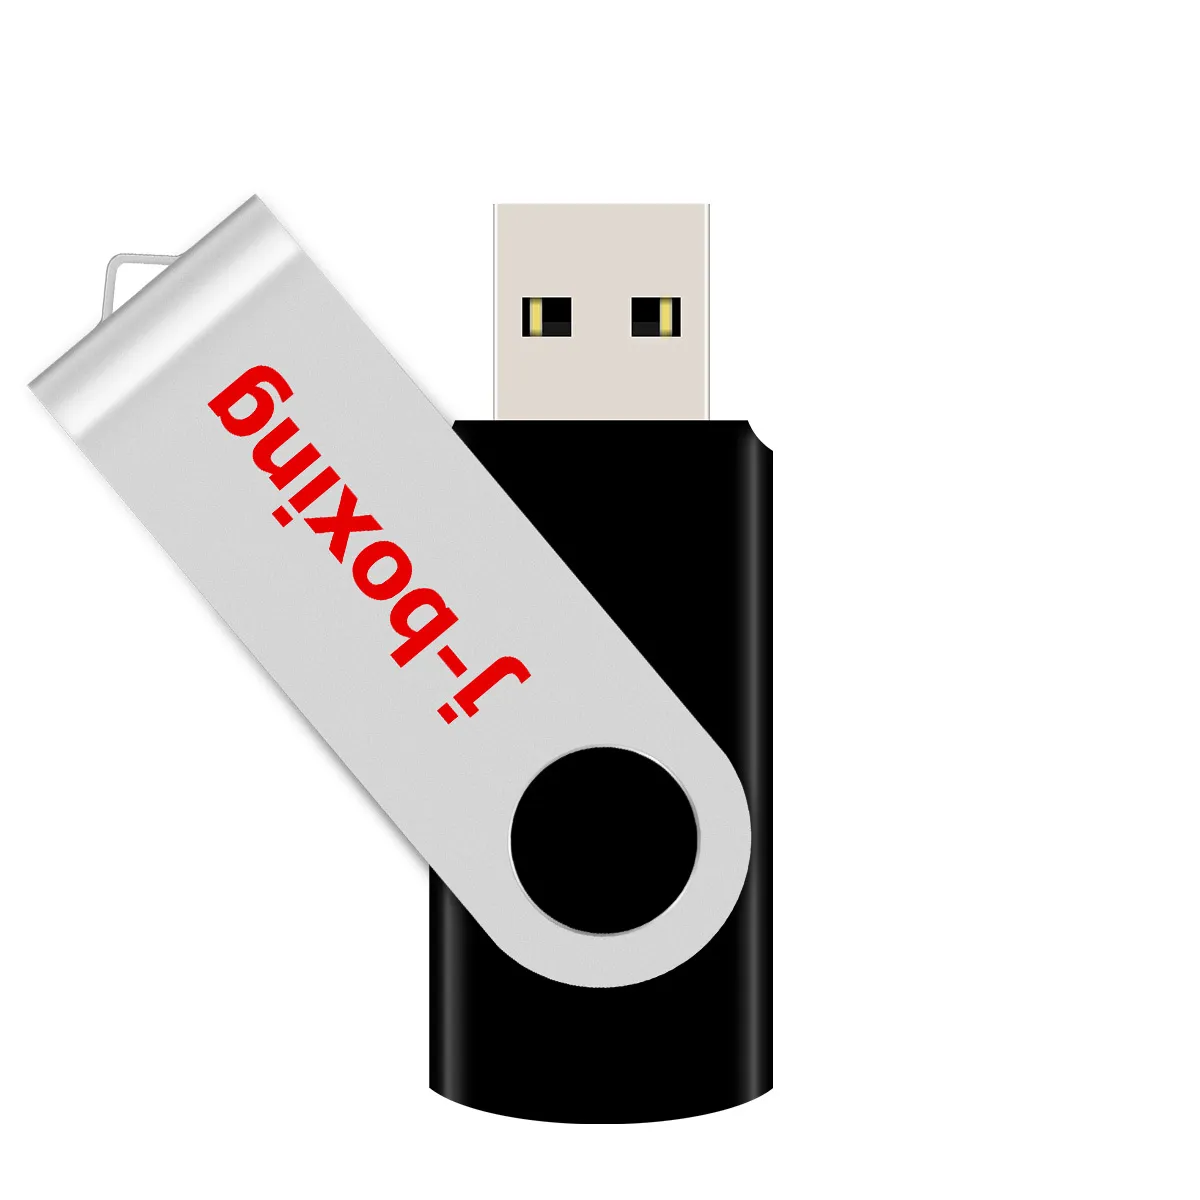 USB KEY VW 32GB file system FAT32, NTFS ideal for offer